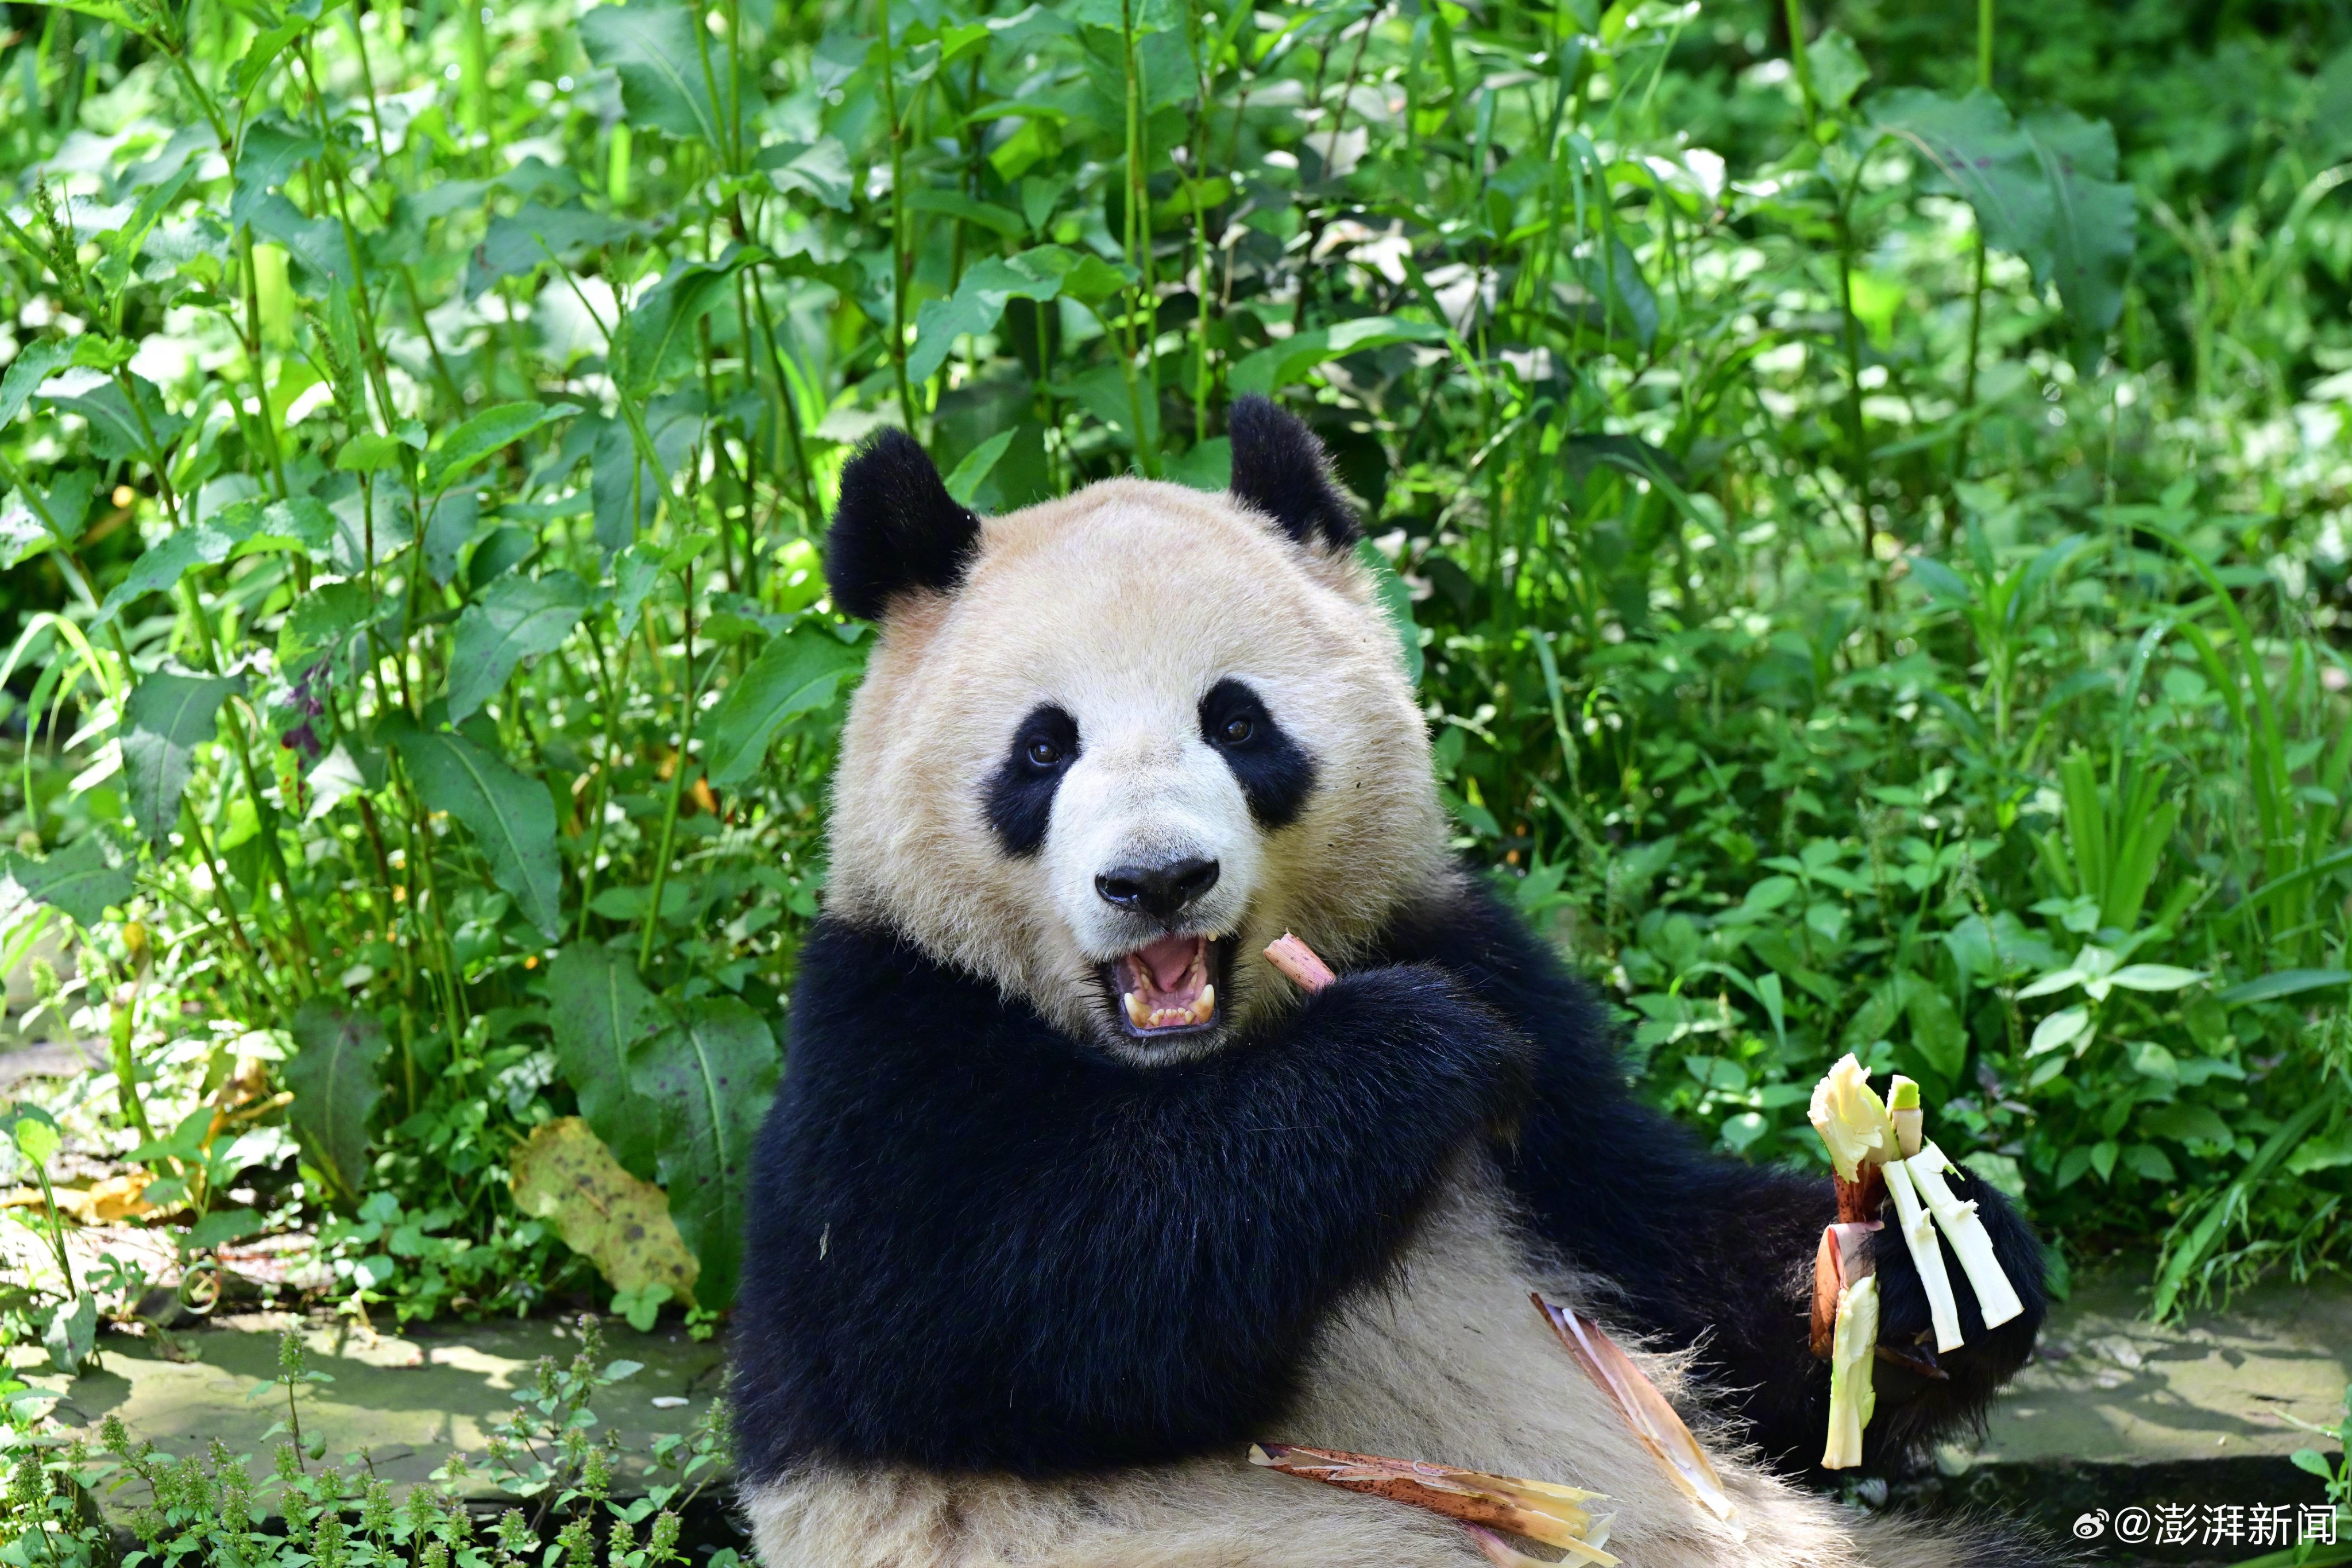 Giant panda Xin Bao will make the trip across the Pacific to San Diego Zoo. Photo: Weibo/澎湃新闻